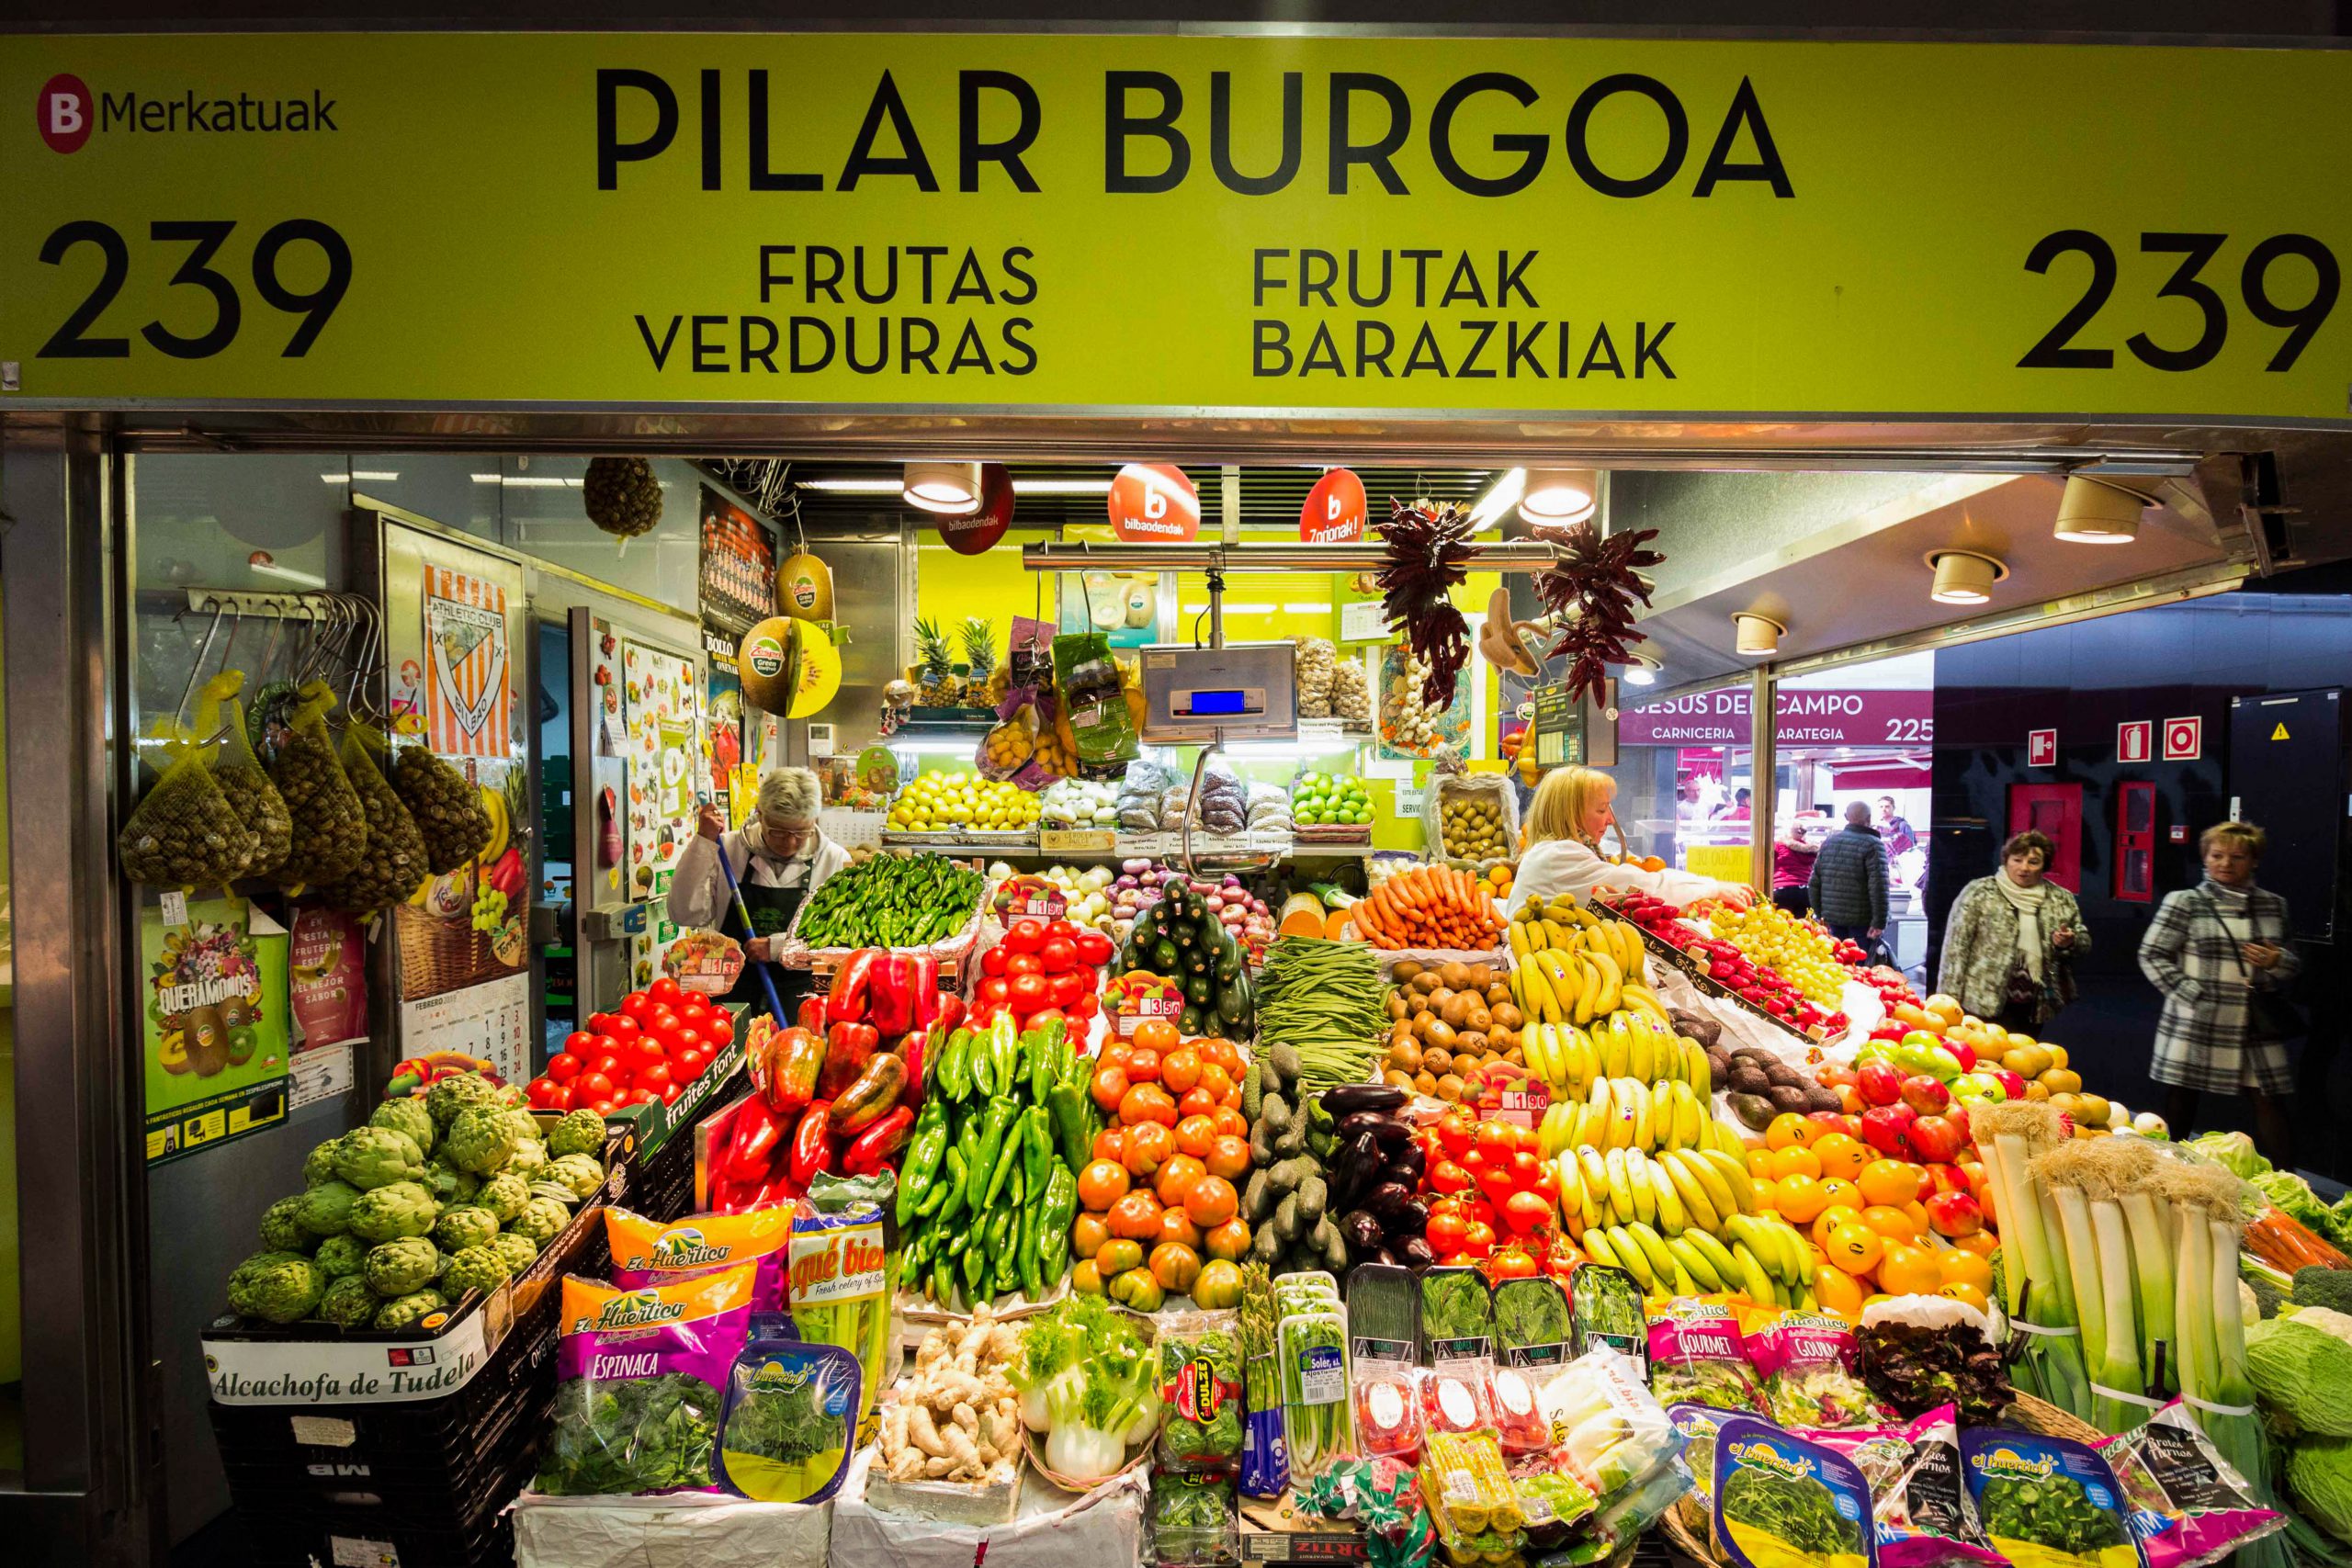 Frutas y verduras Pilar Burgoa